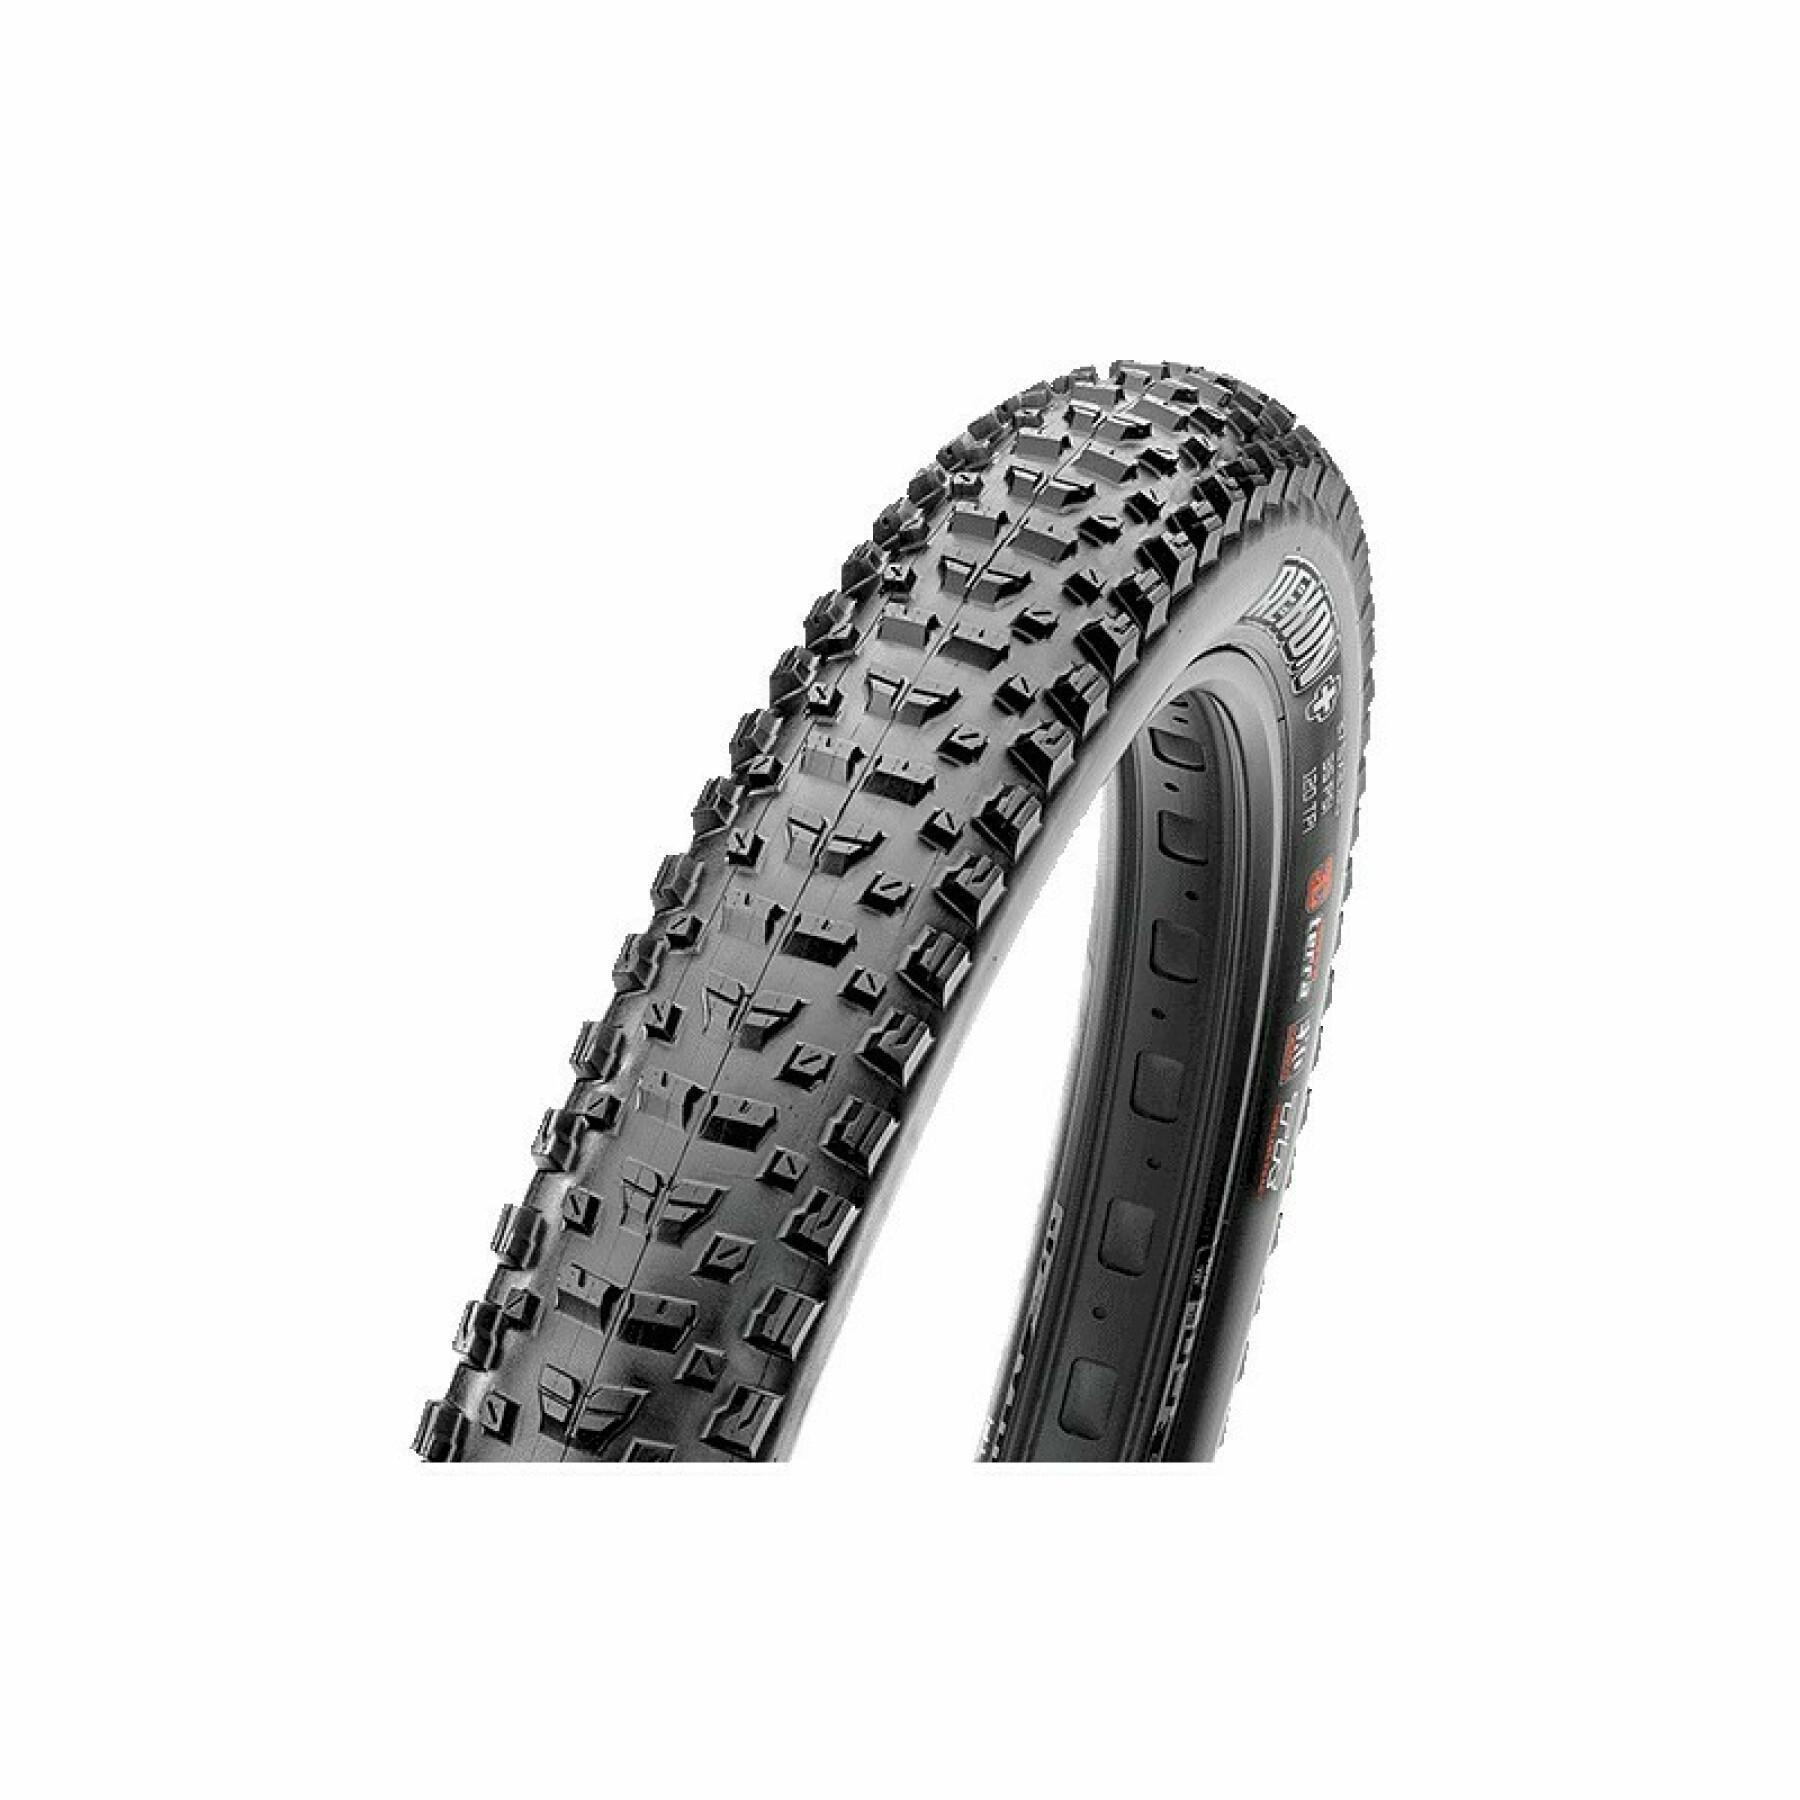 Soft tire Maxxis Rekon+ 29x2.80 Exo / Tubeless Ready